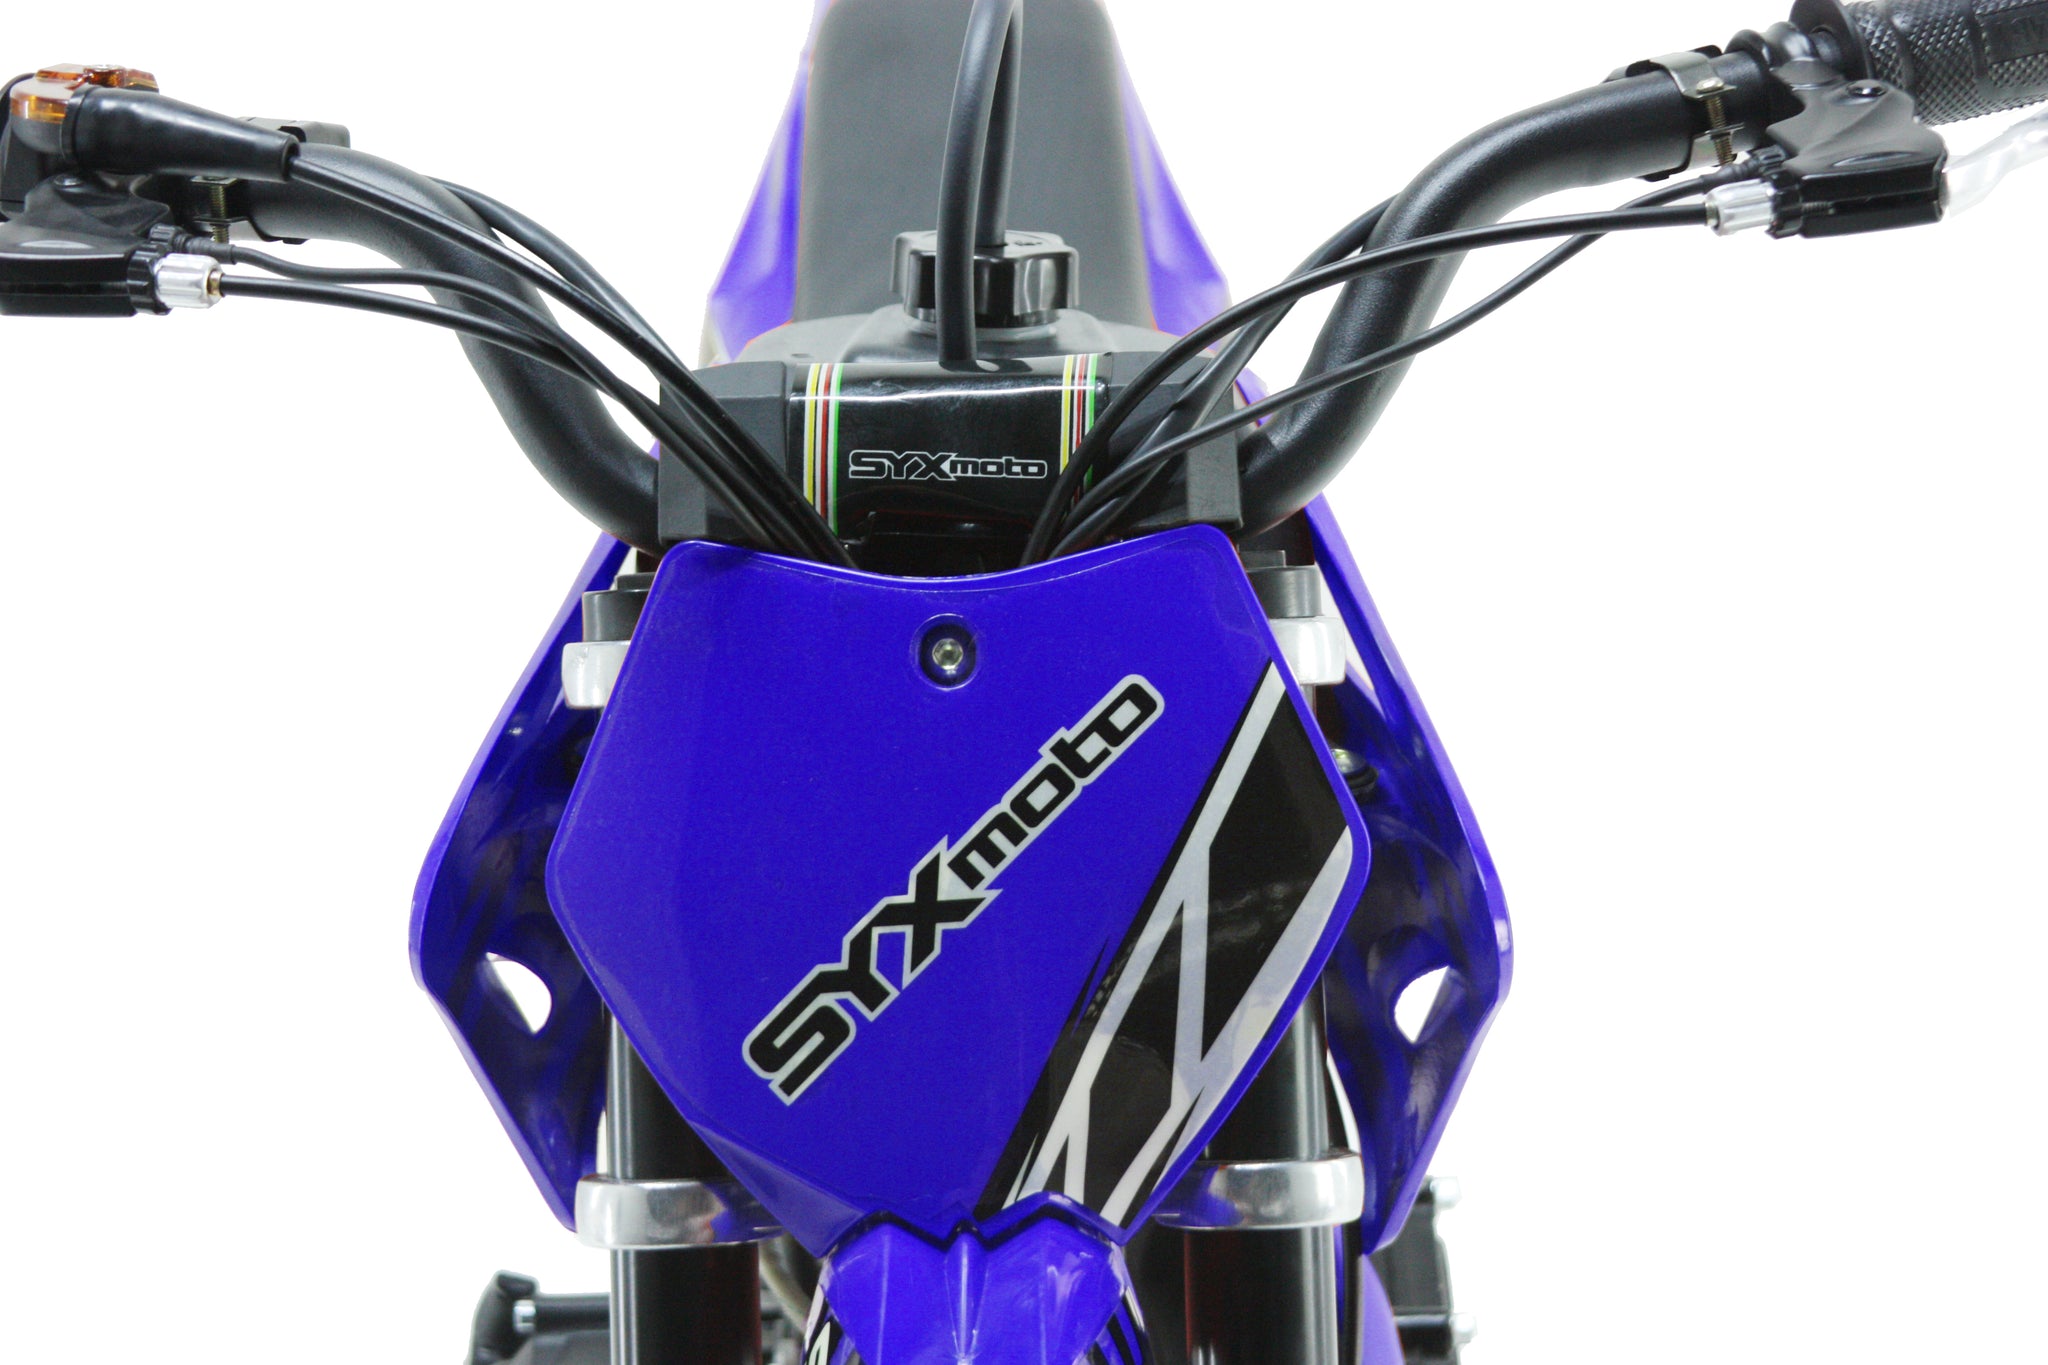 SYX MOTO Holeshot ES 50cc Electric Start Mini Dirt Bike, Red